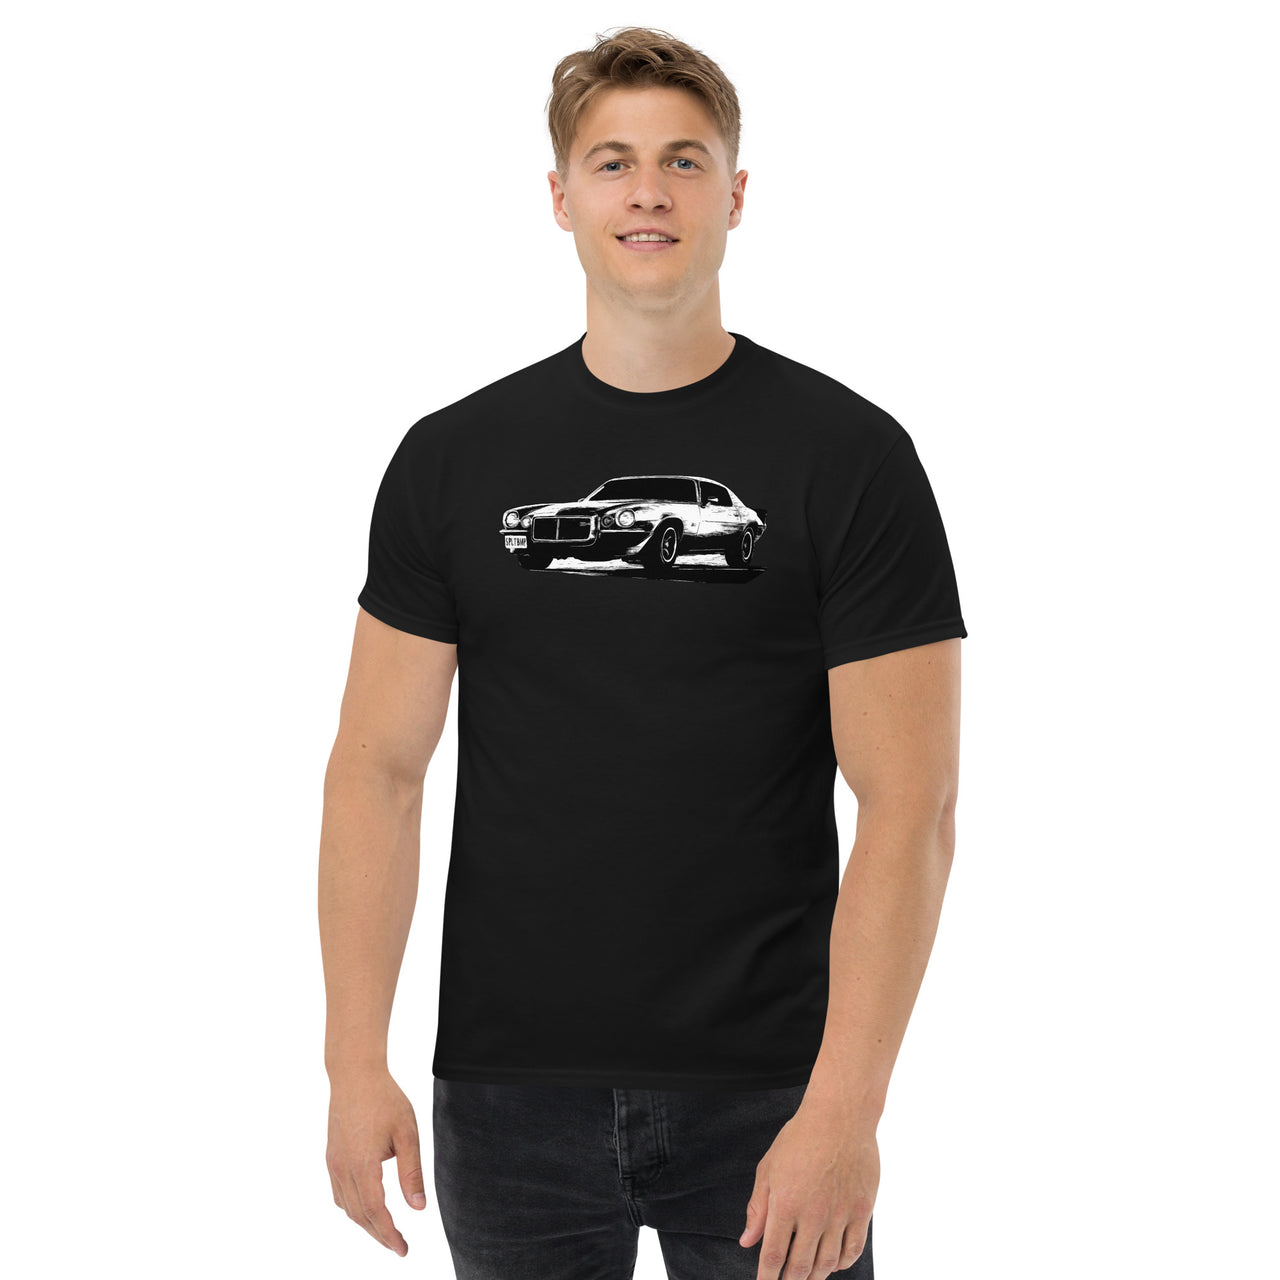 73 Camaro T-Shirt modeled in black